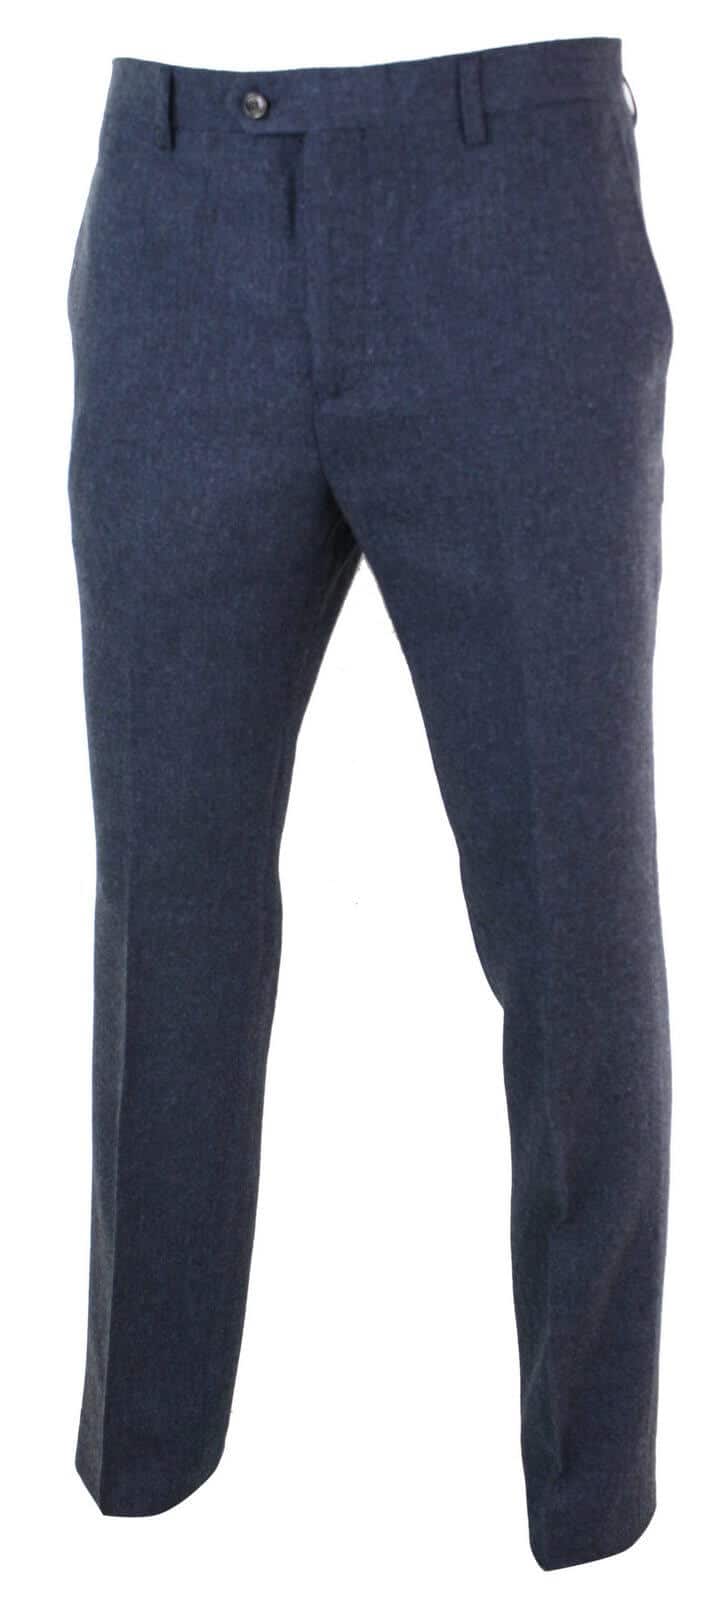 Cavani Martez Tweed Navy Men's Slim Fit Trousers